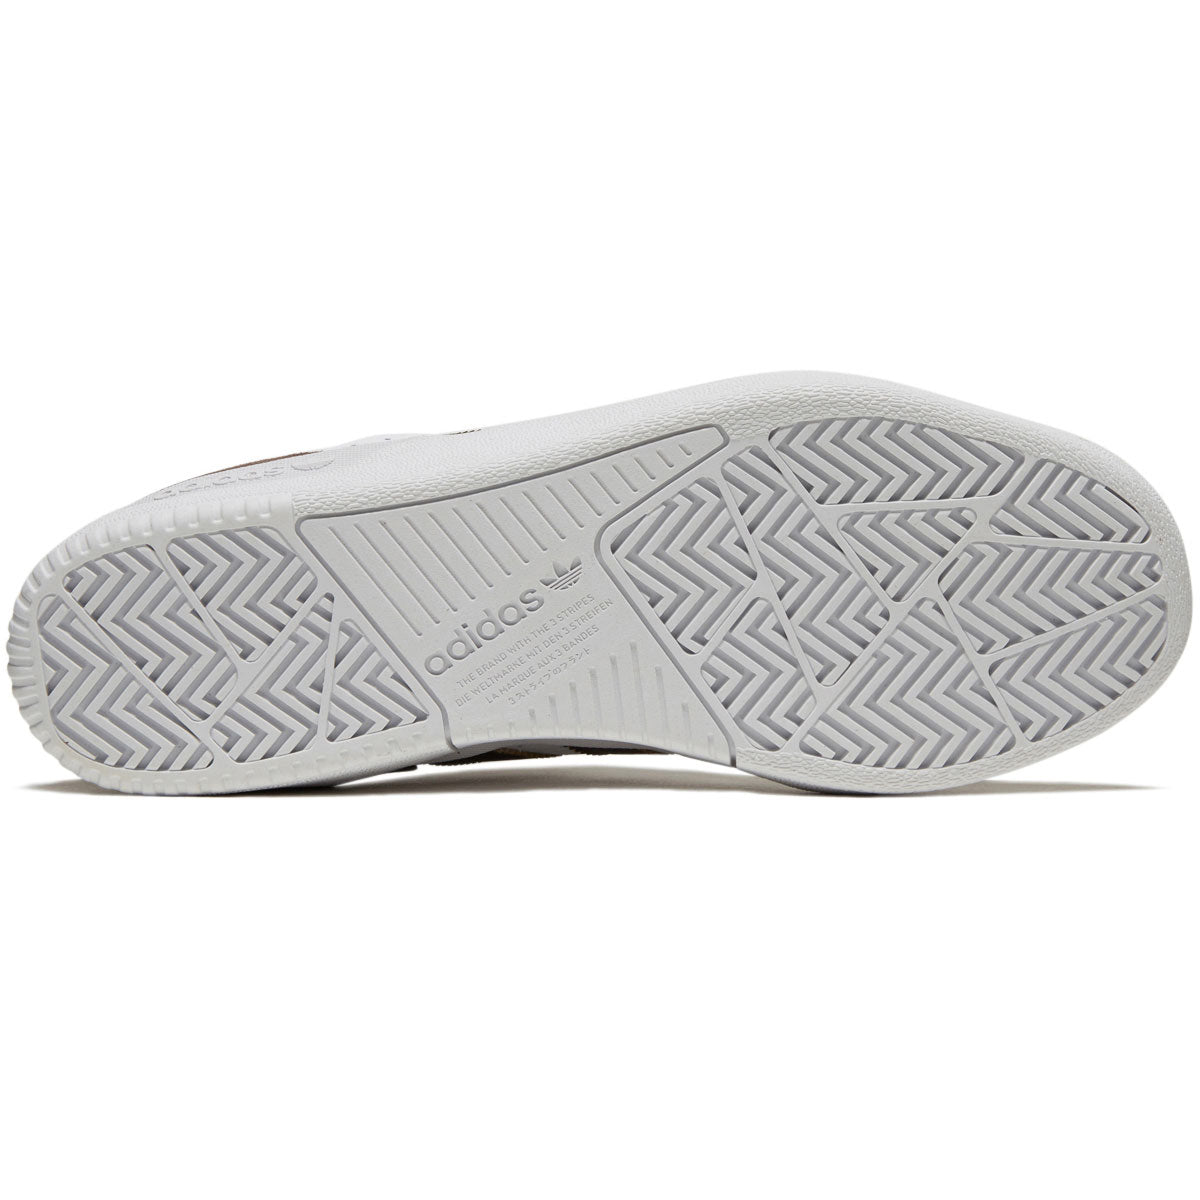 Adidas Tyshawn Low Shoes - Brown/White/Gold Metallic image 4